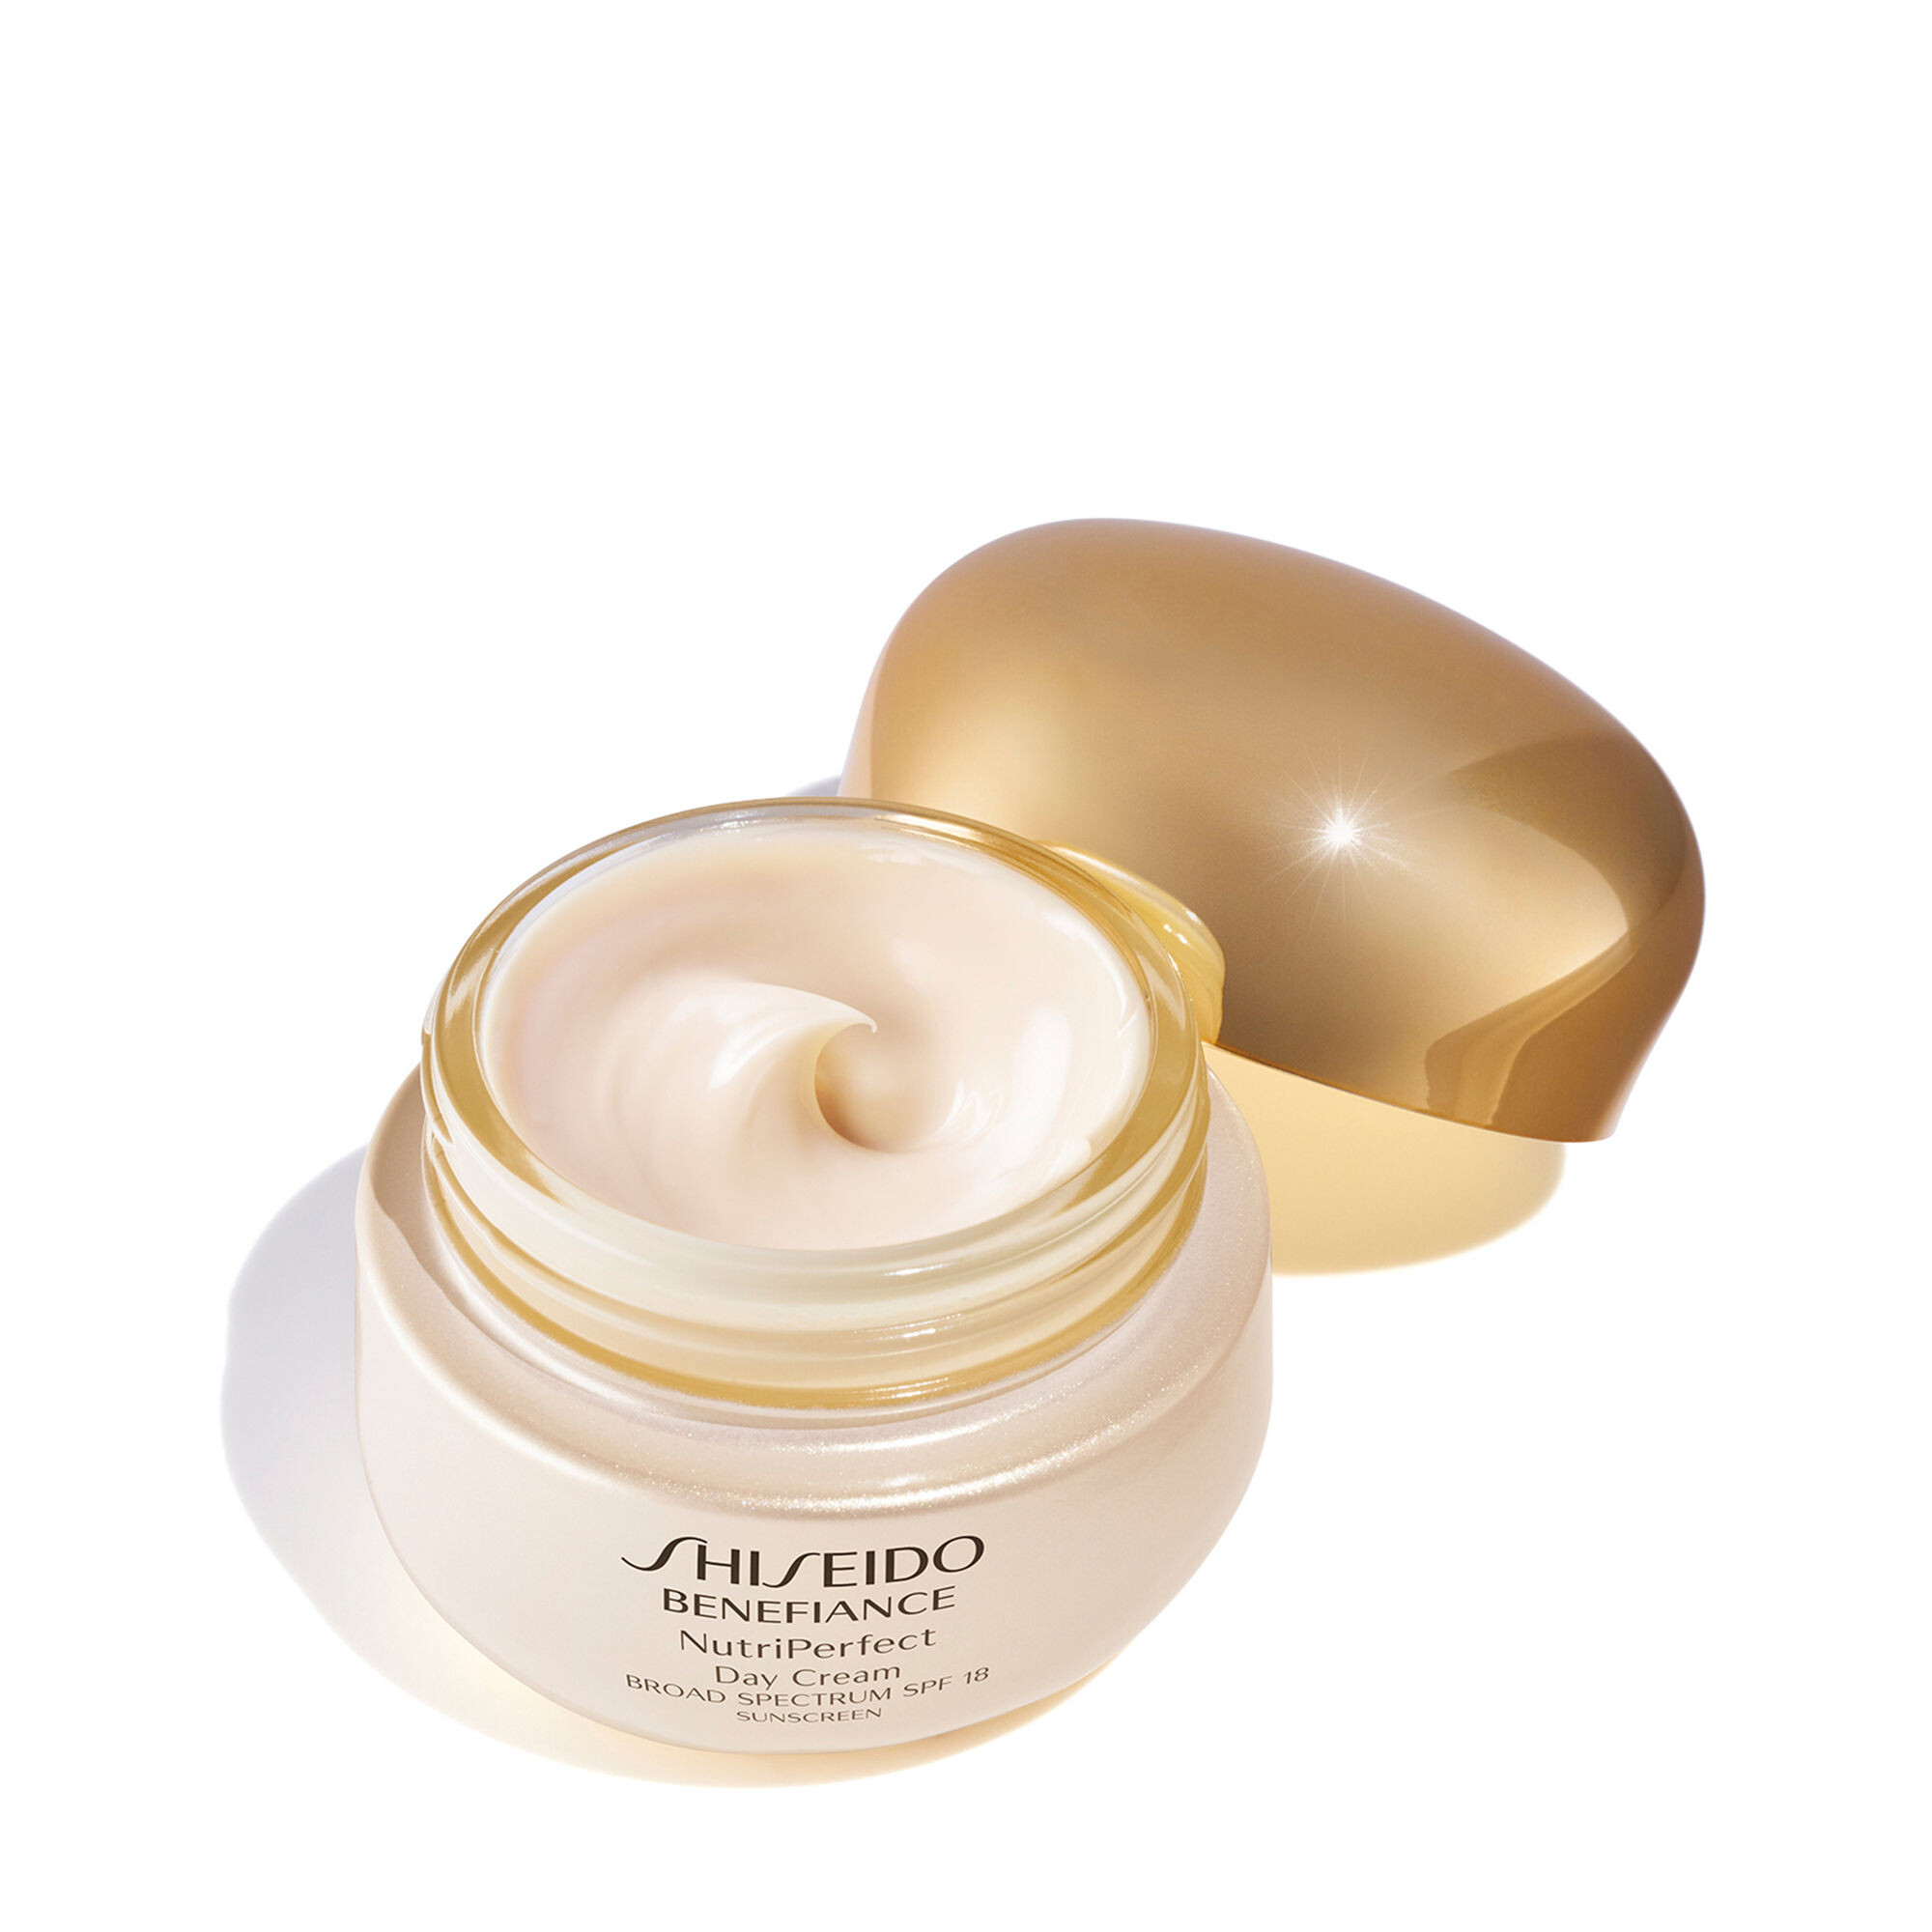 Tagescreme Shiseido Benefiance NutriPerfect Day Cream SPF15 50ml kaufen